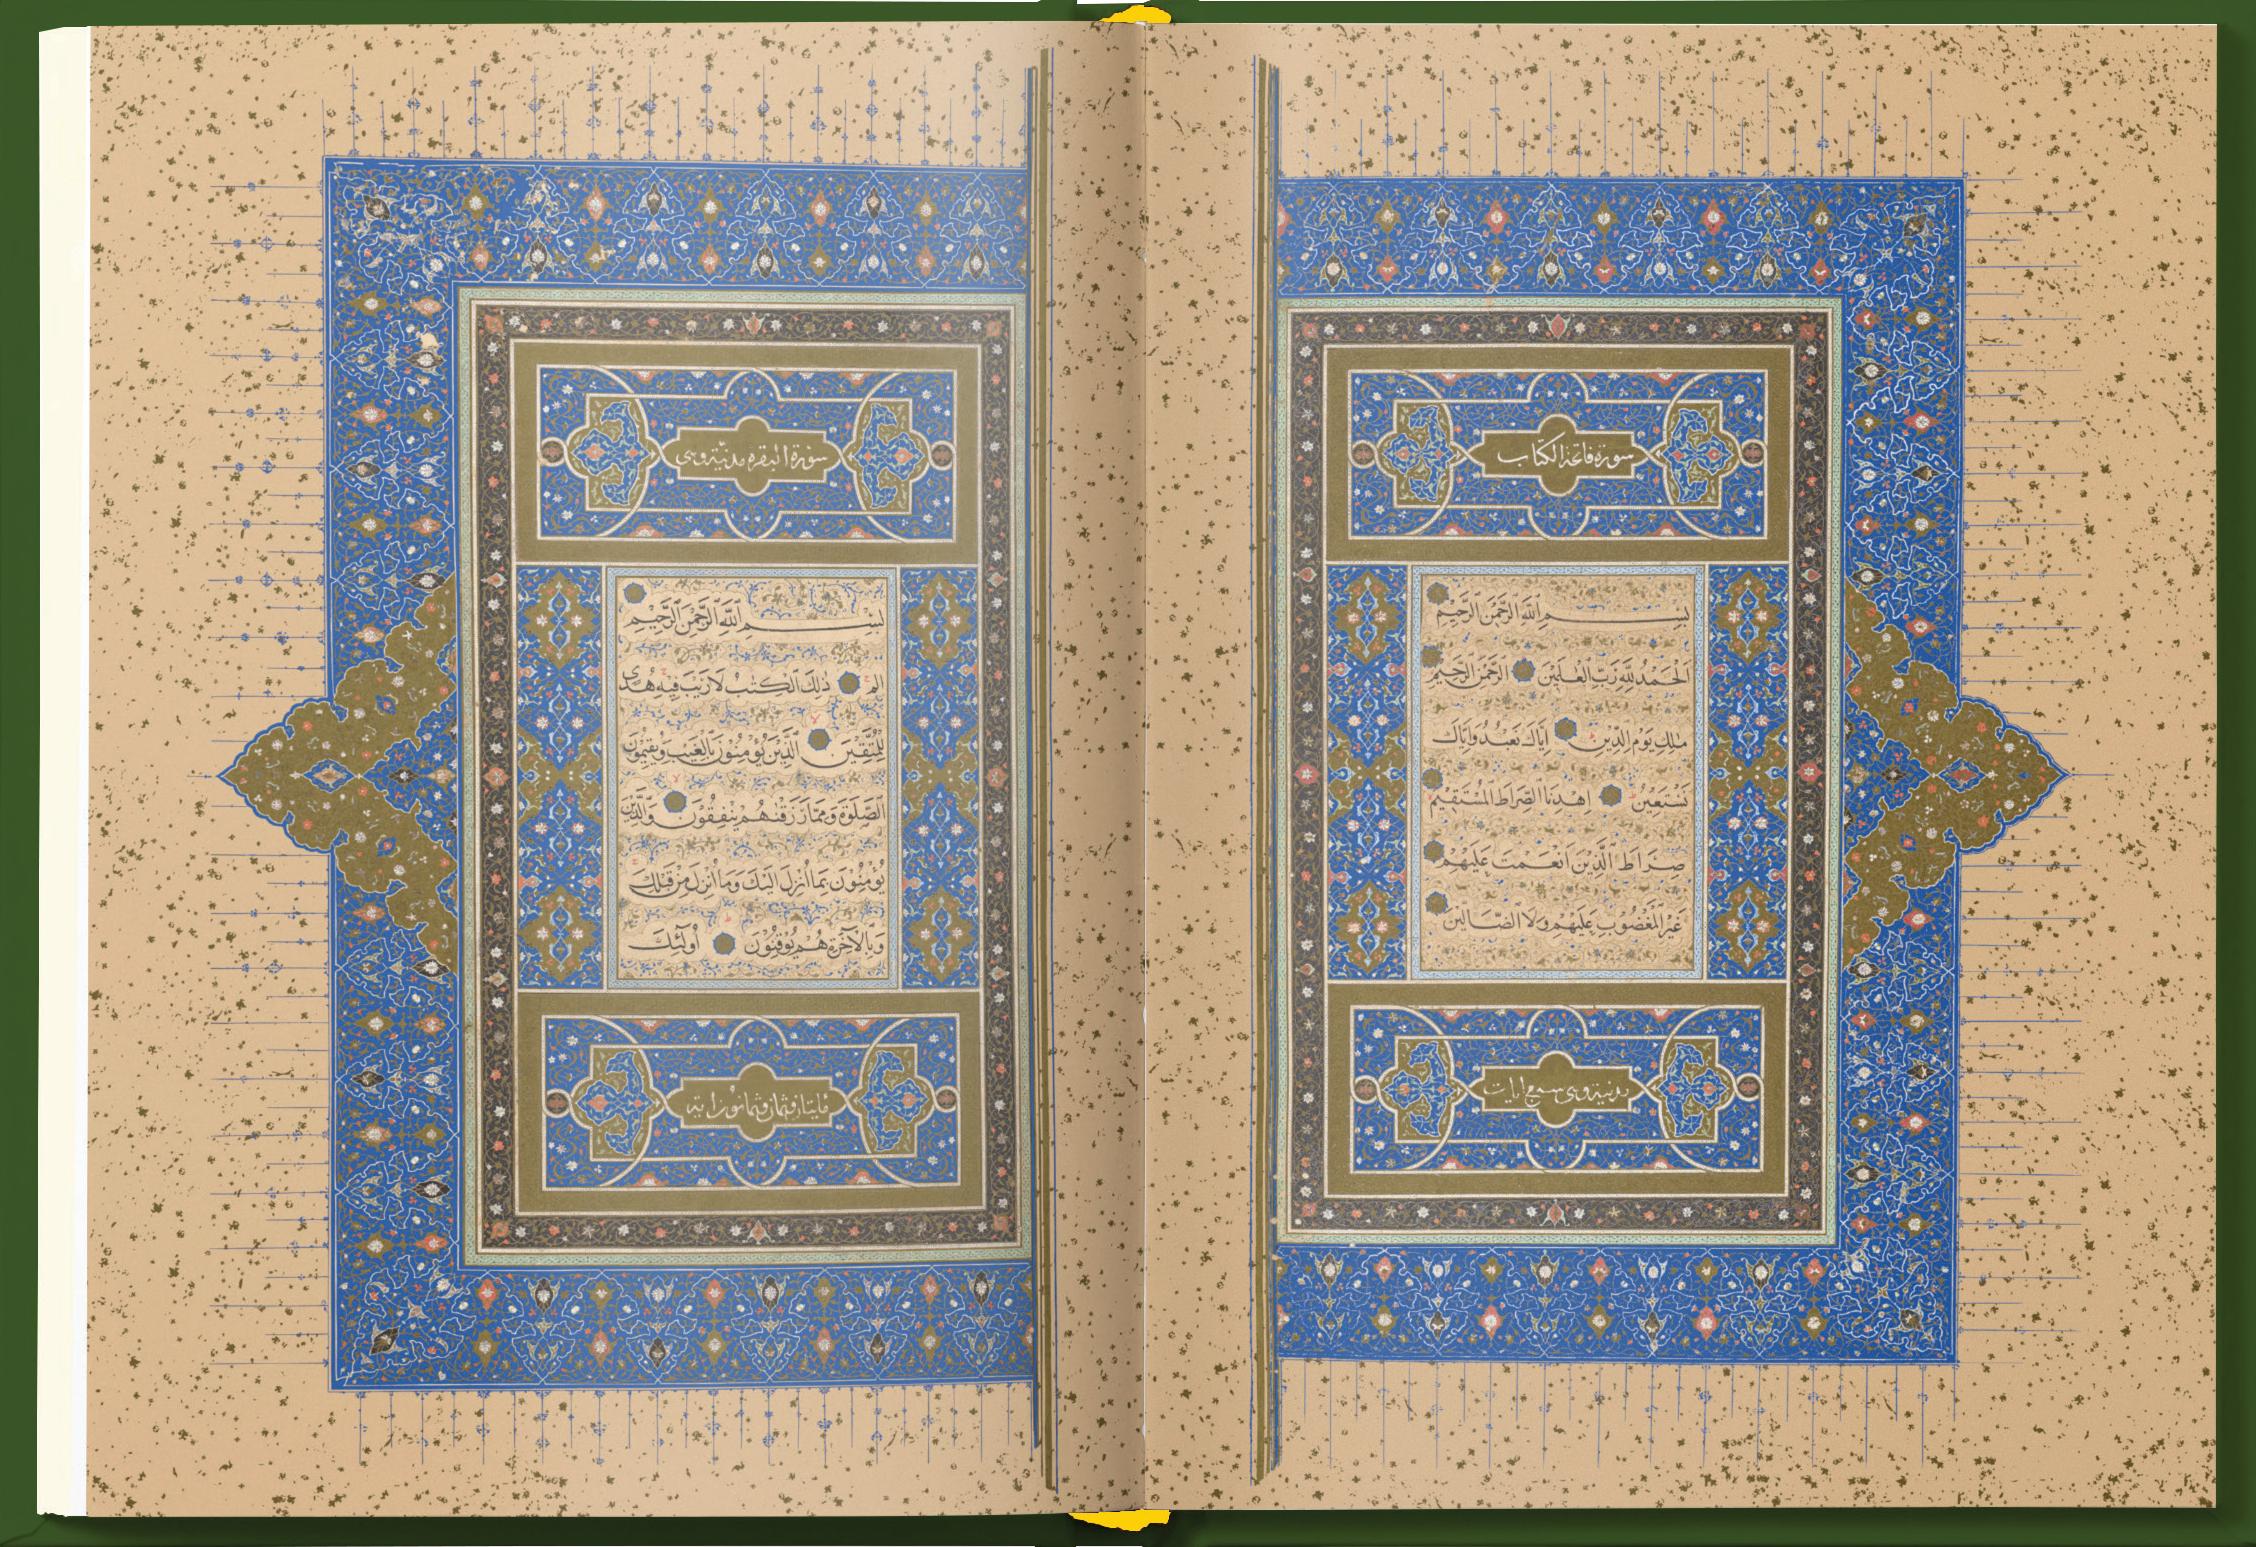 Noble Quran-Arabic & English, Mufti Taqi Uthmani, Deluxe Edition